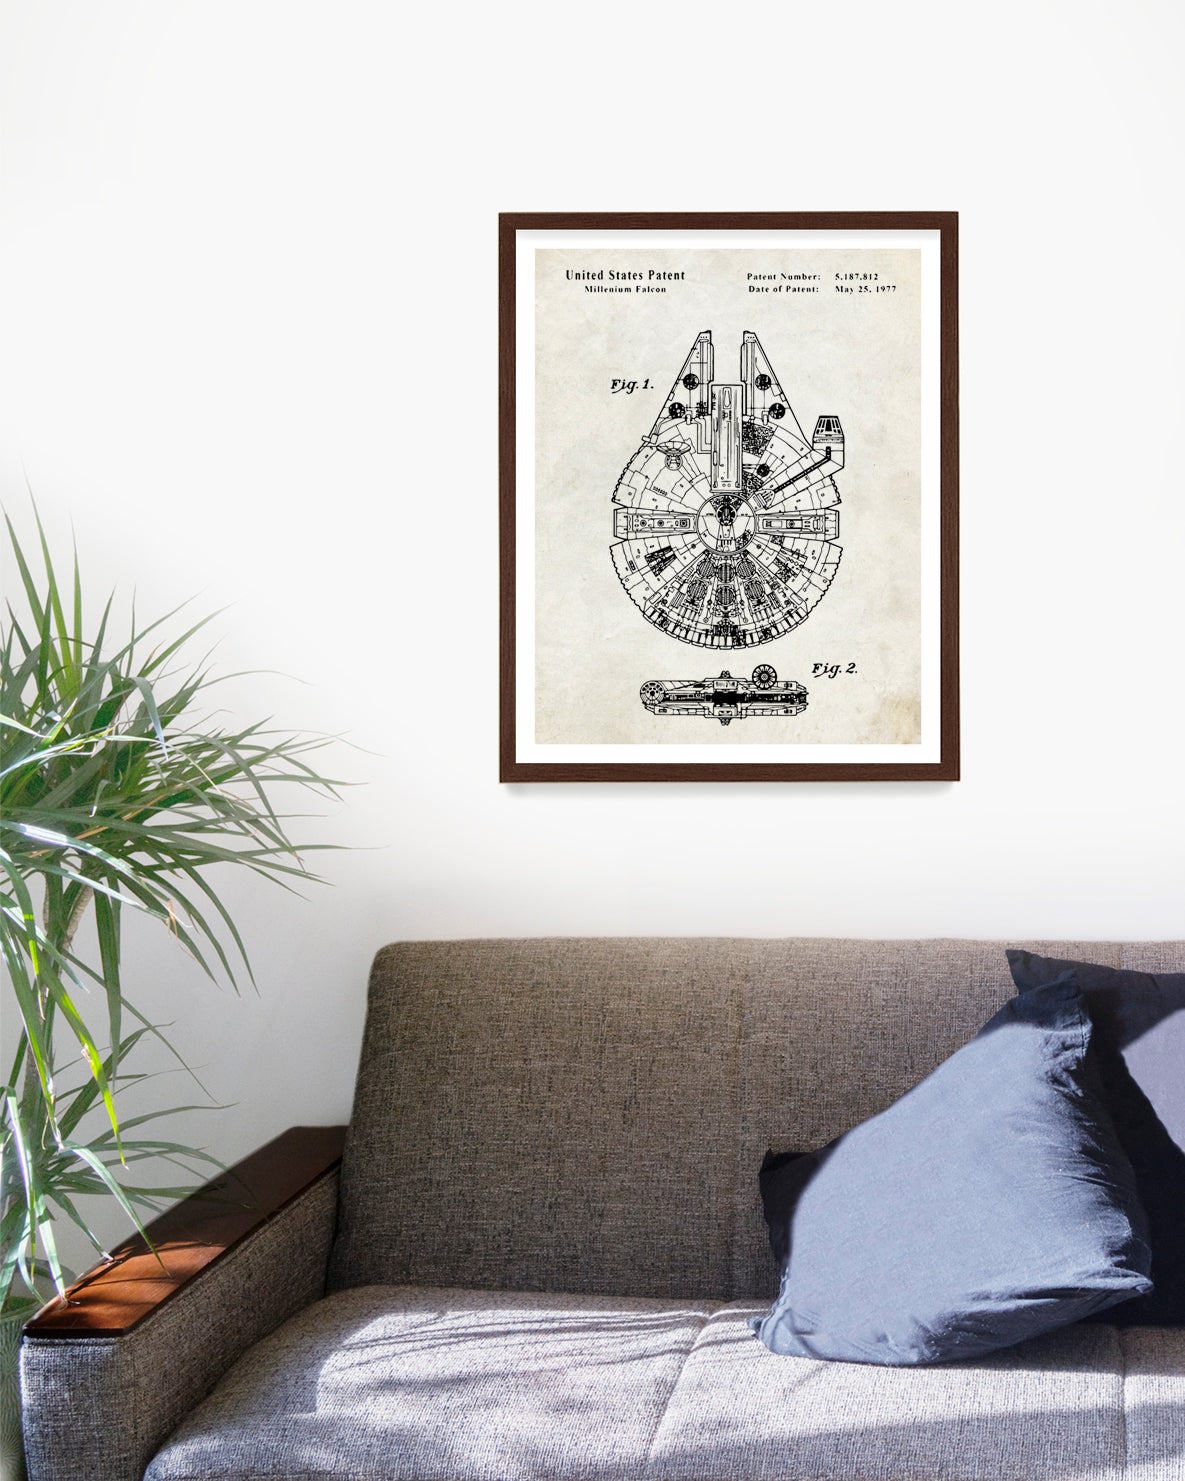 Millenium Falcon Patent Poster, Star Wars Patent Wall Art